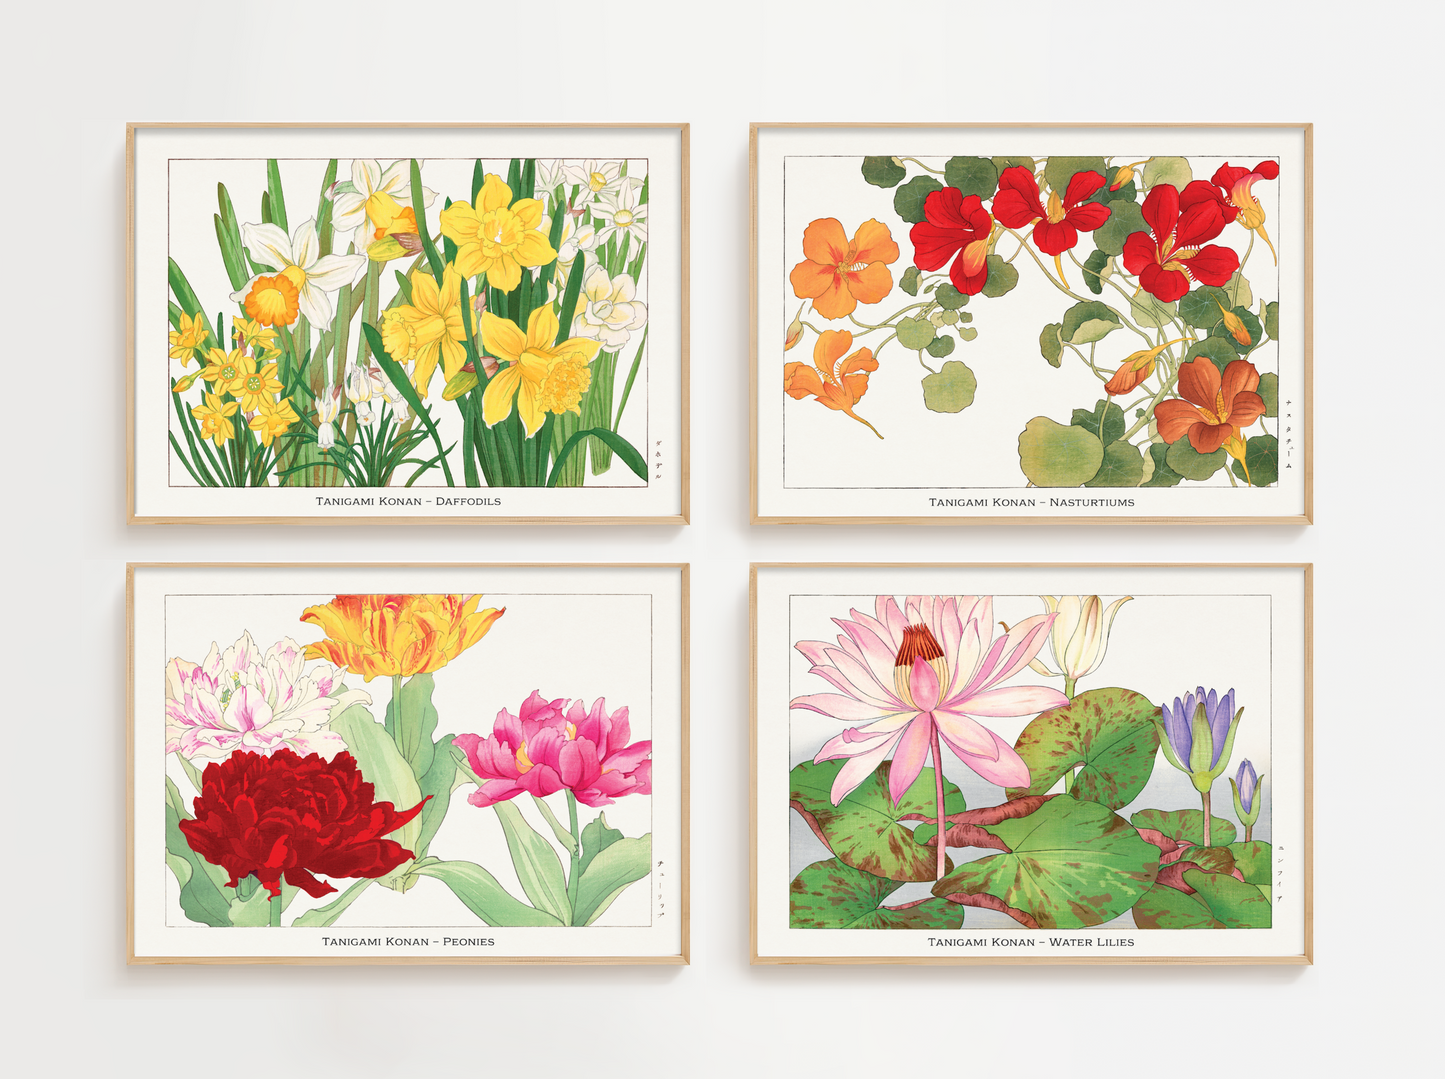 Daffodil Print – Japanese Art Print